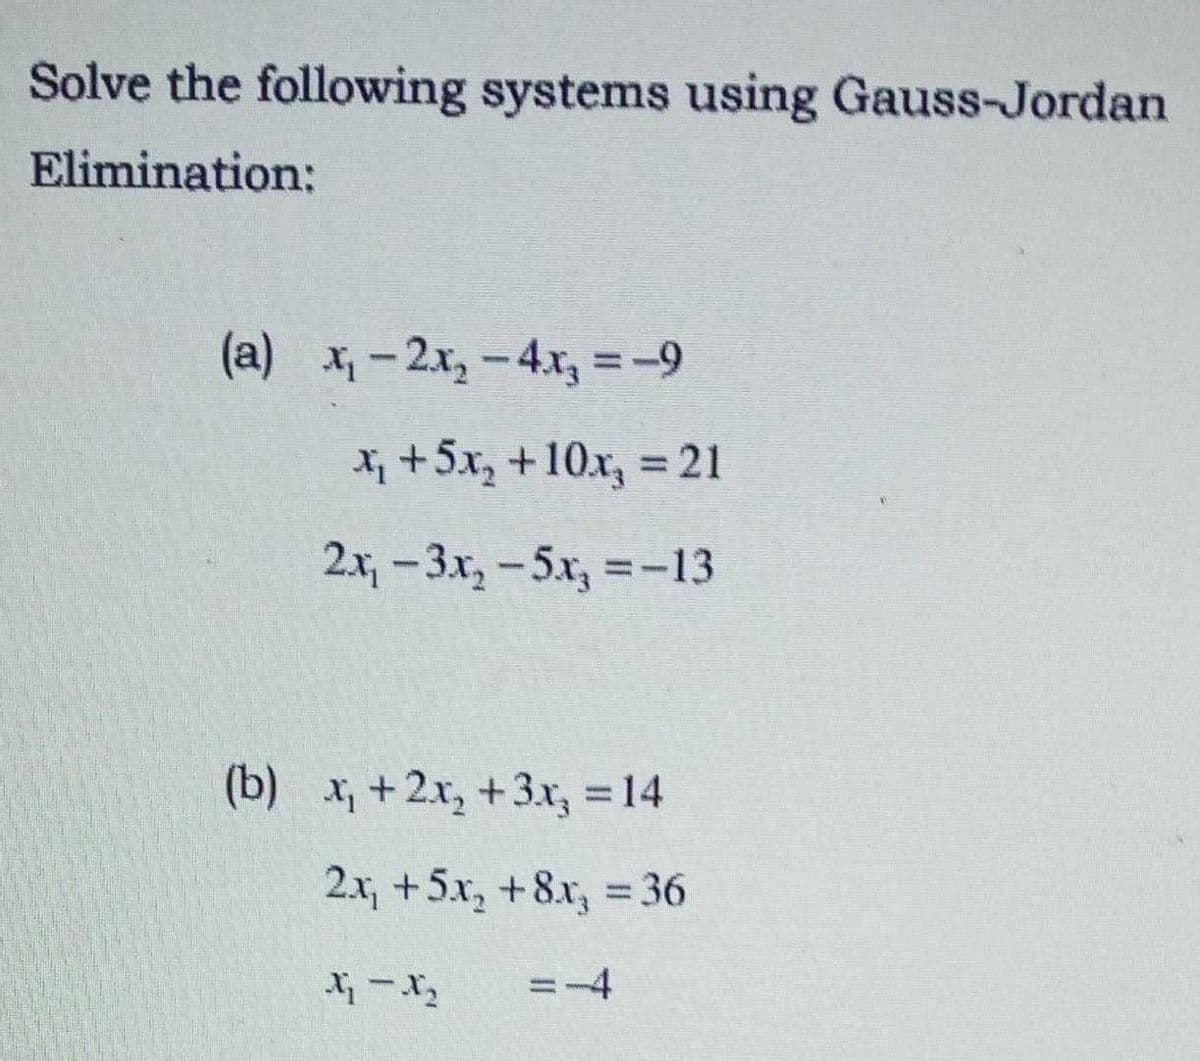 Solve the following systems using Gauss-Jordan
Elimination:
(a) x₁ - 2x₂ - 4x₂ = -9
x₁ +5x₂ +10x₂ = 21
2x₁ -3x₂ -5x₂ = -13
(b) x₁ + 2x₂ + 3x₂ = 14
2x₁ +5x₂ +8x₂ = 36
17-1₂
=